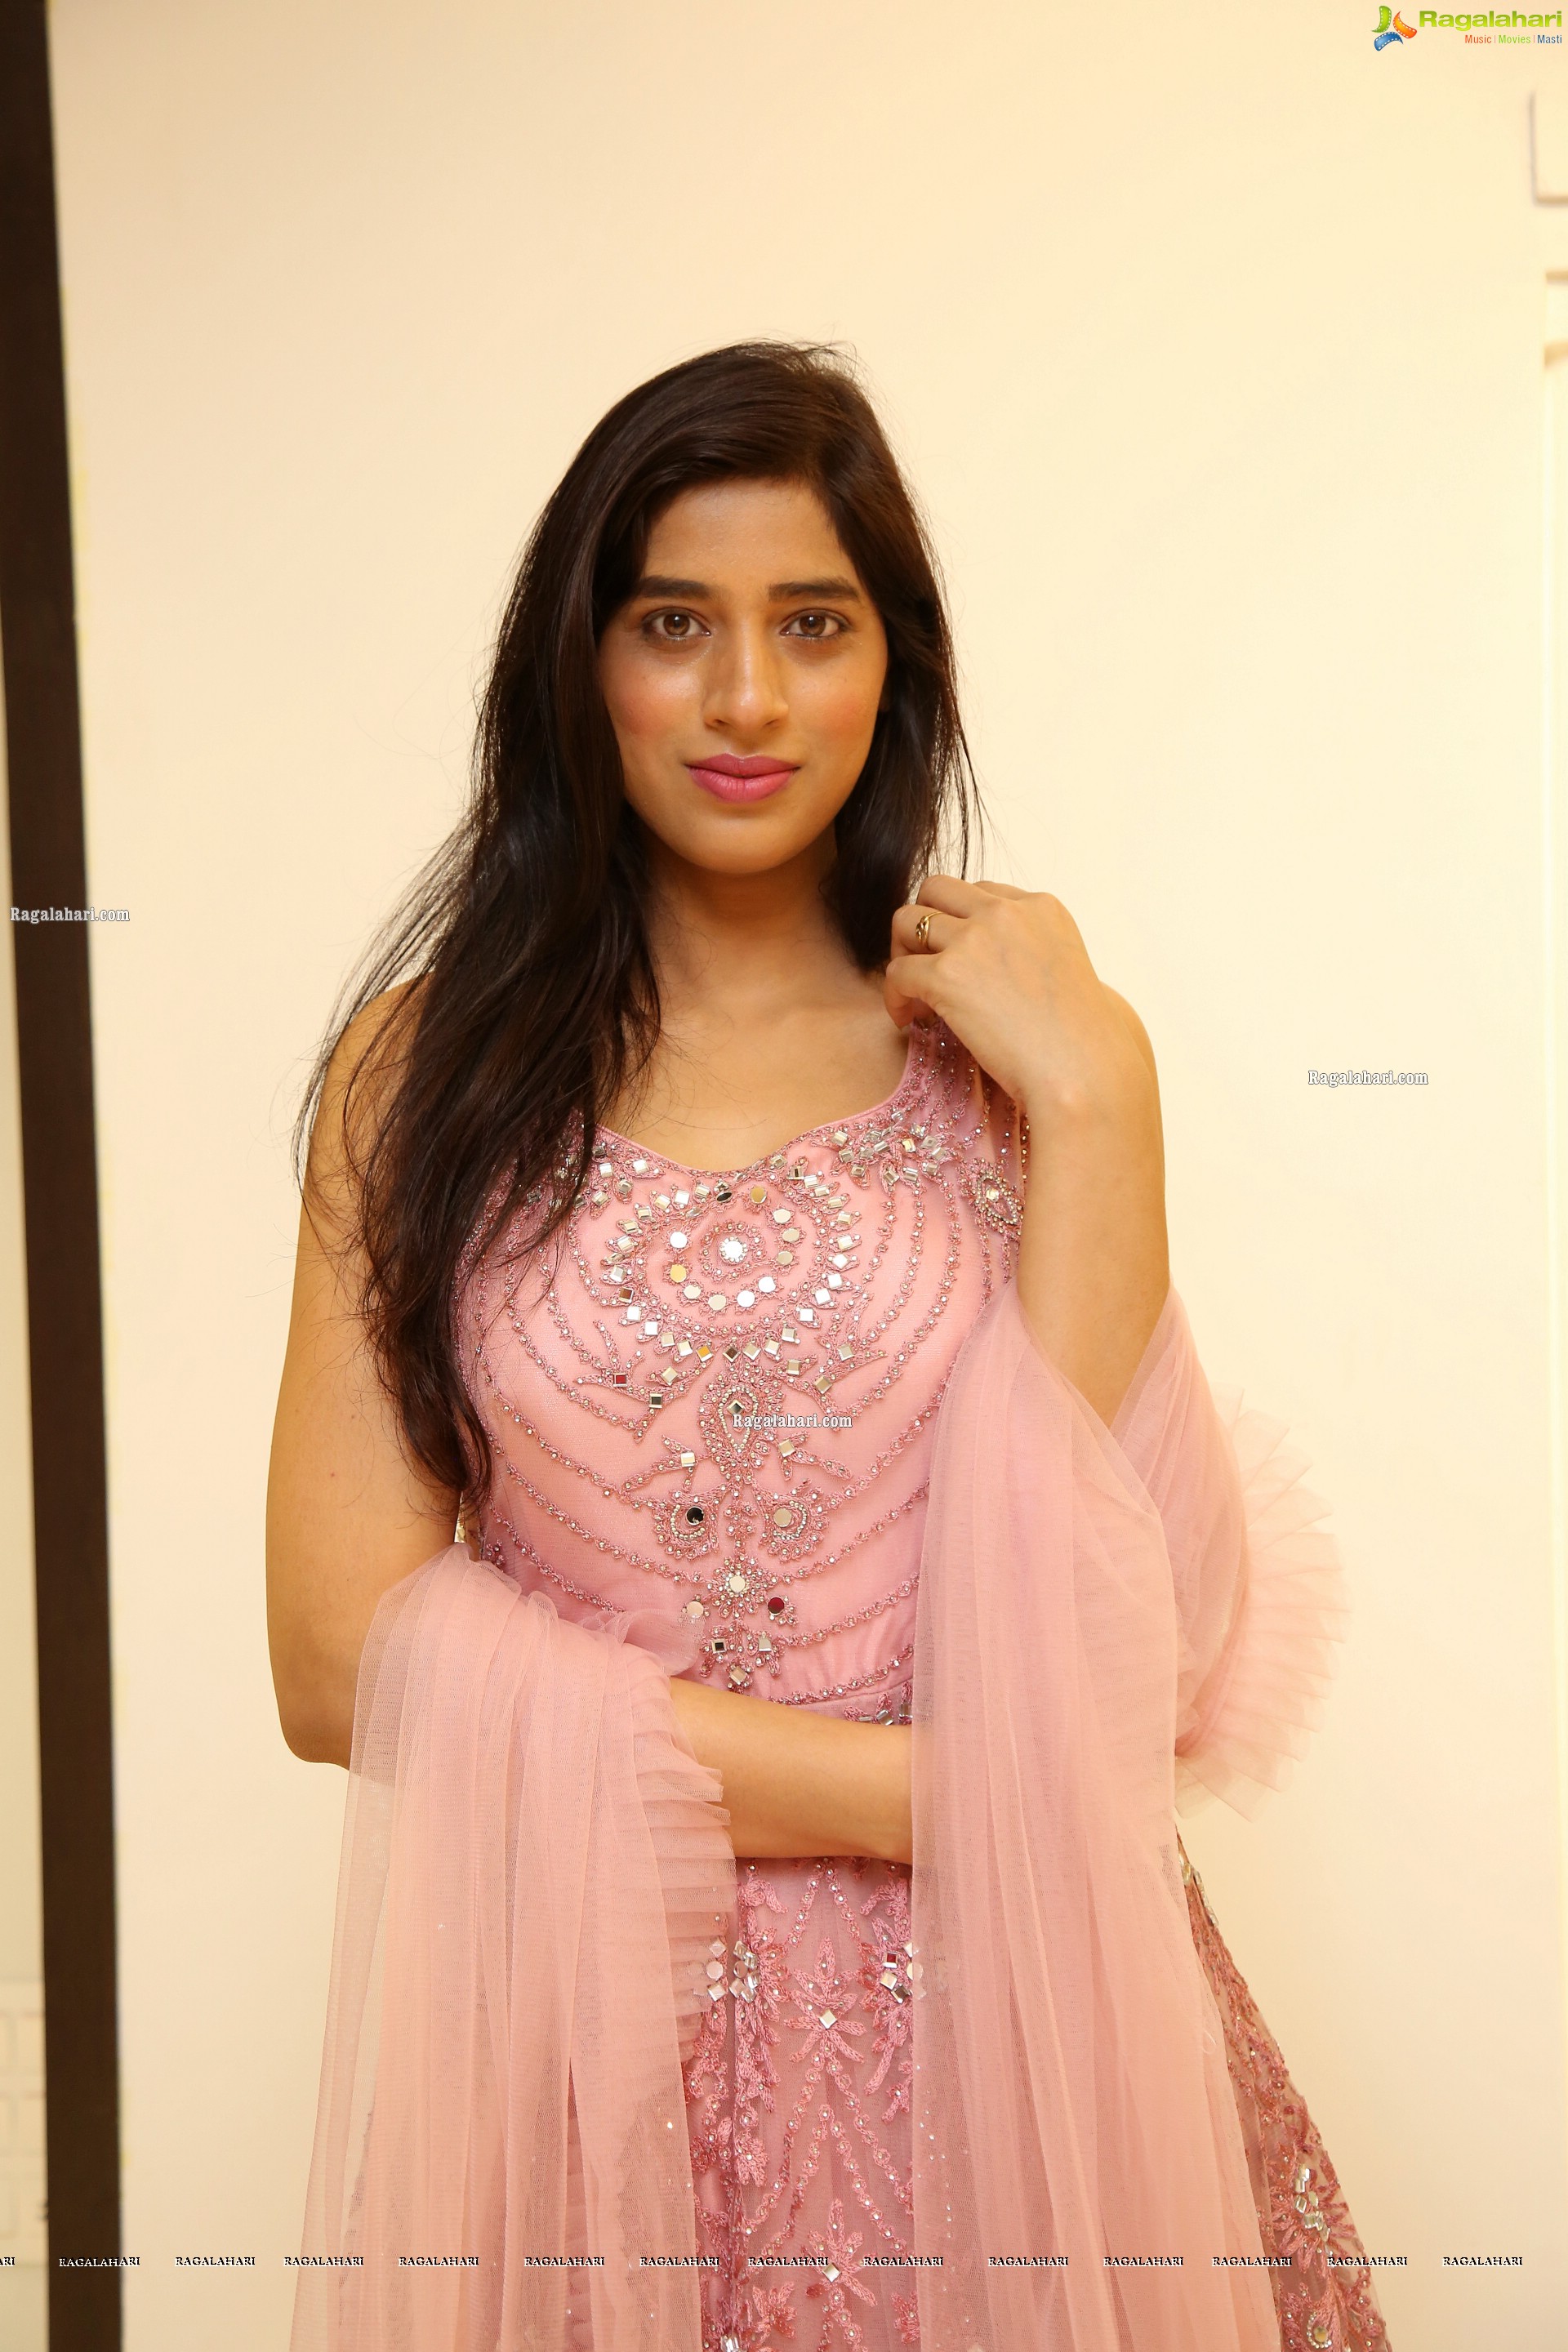 Naziya Khan in Pink Embellished Dress, HD Photo Gallery